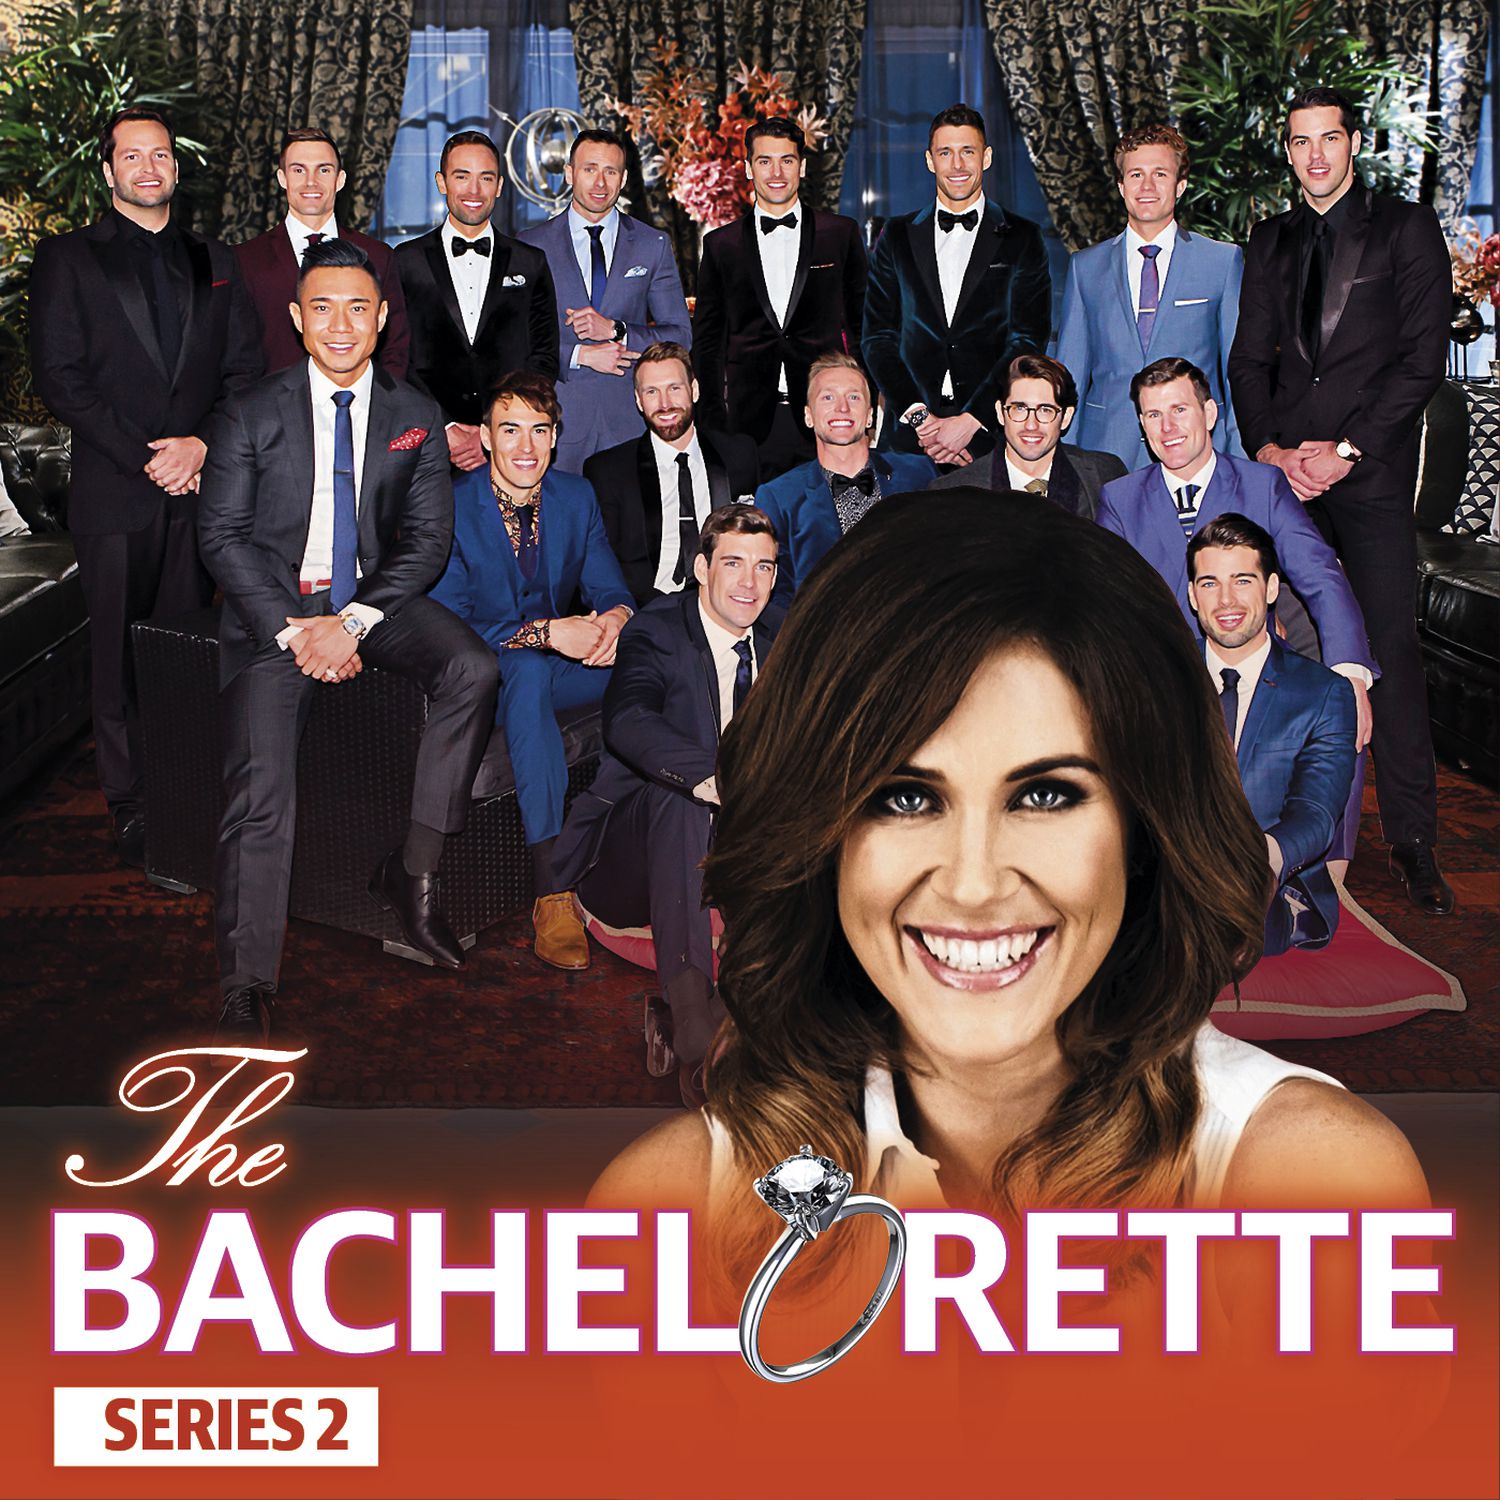 The Bachelorette - Series 2